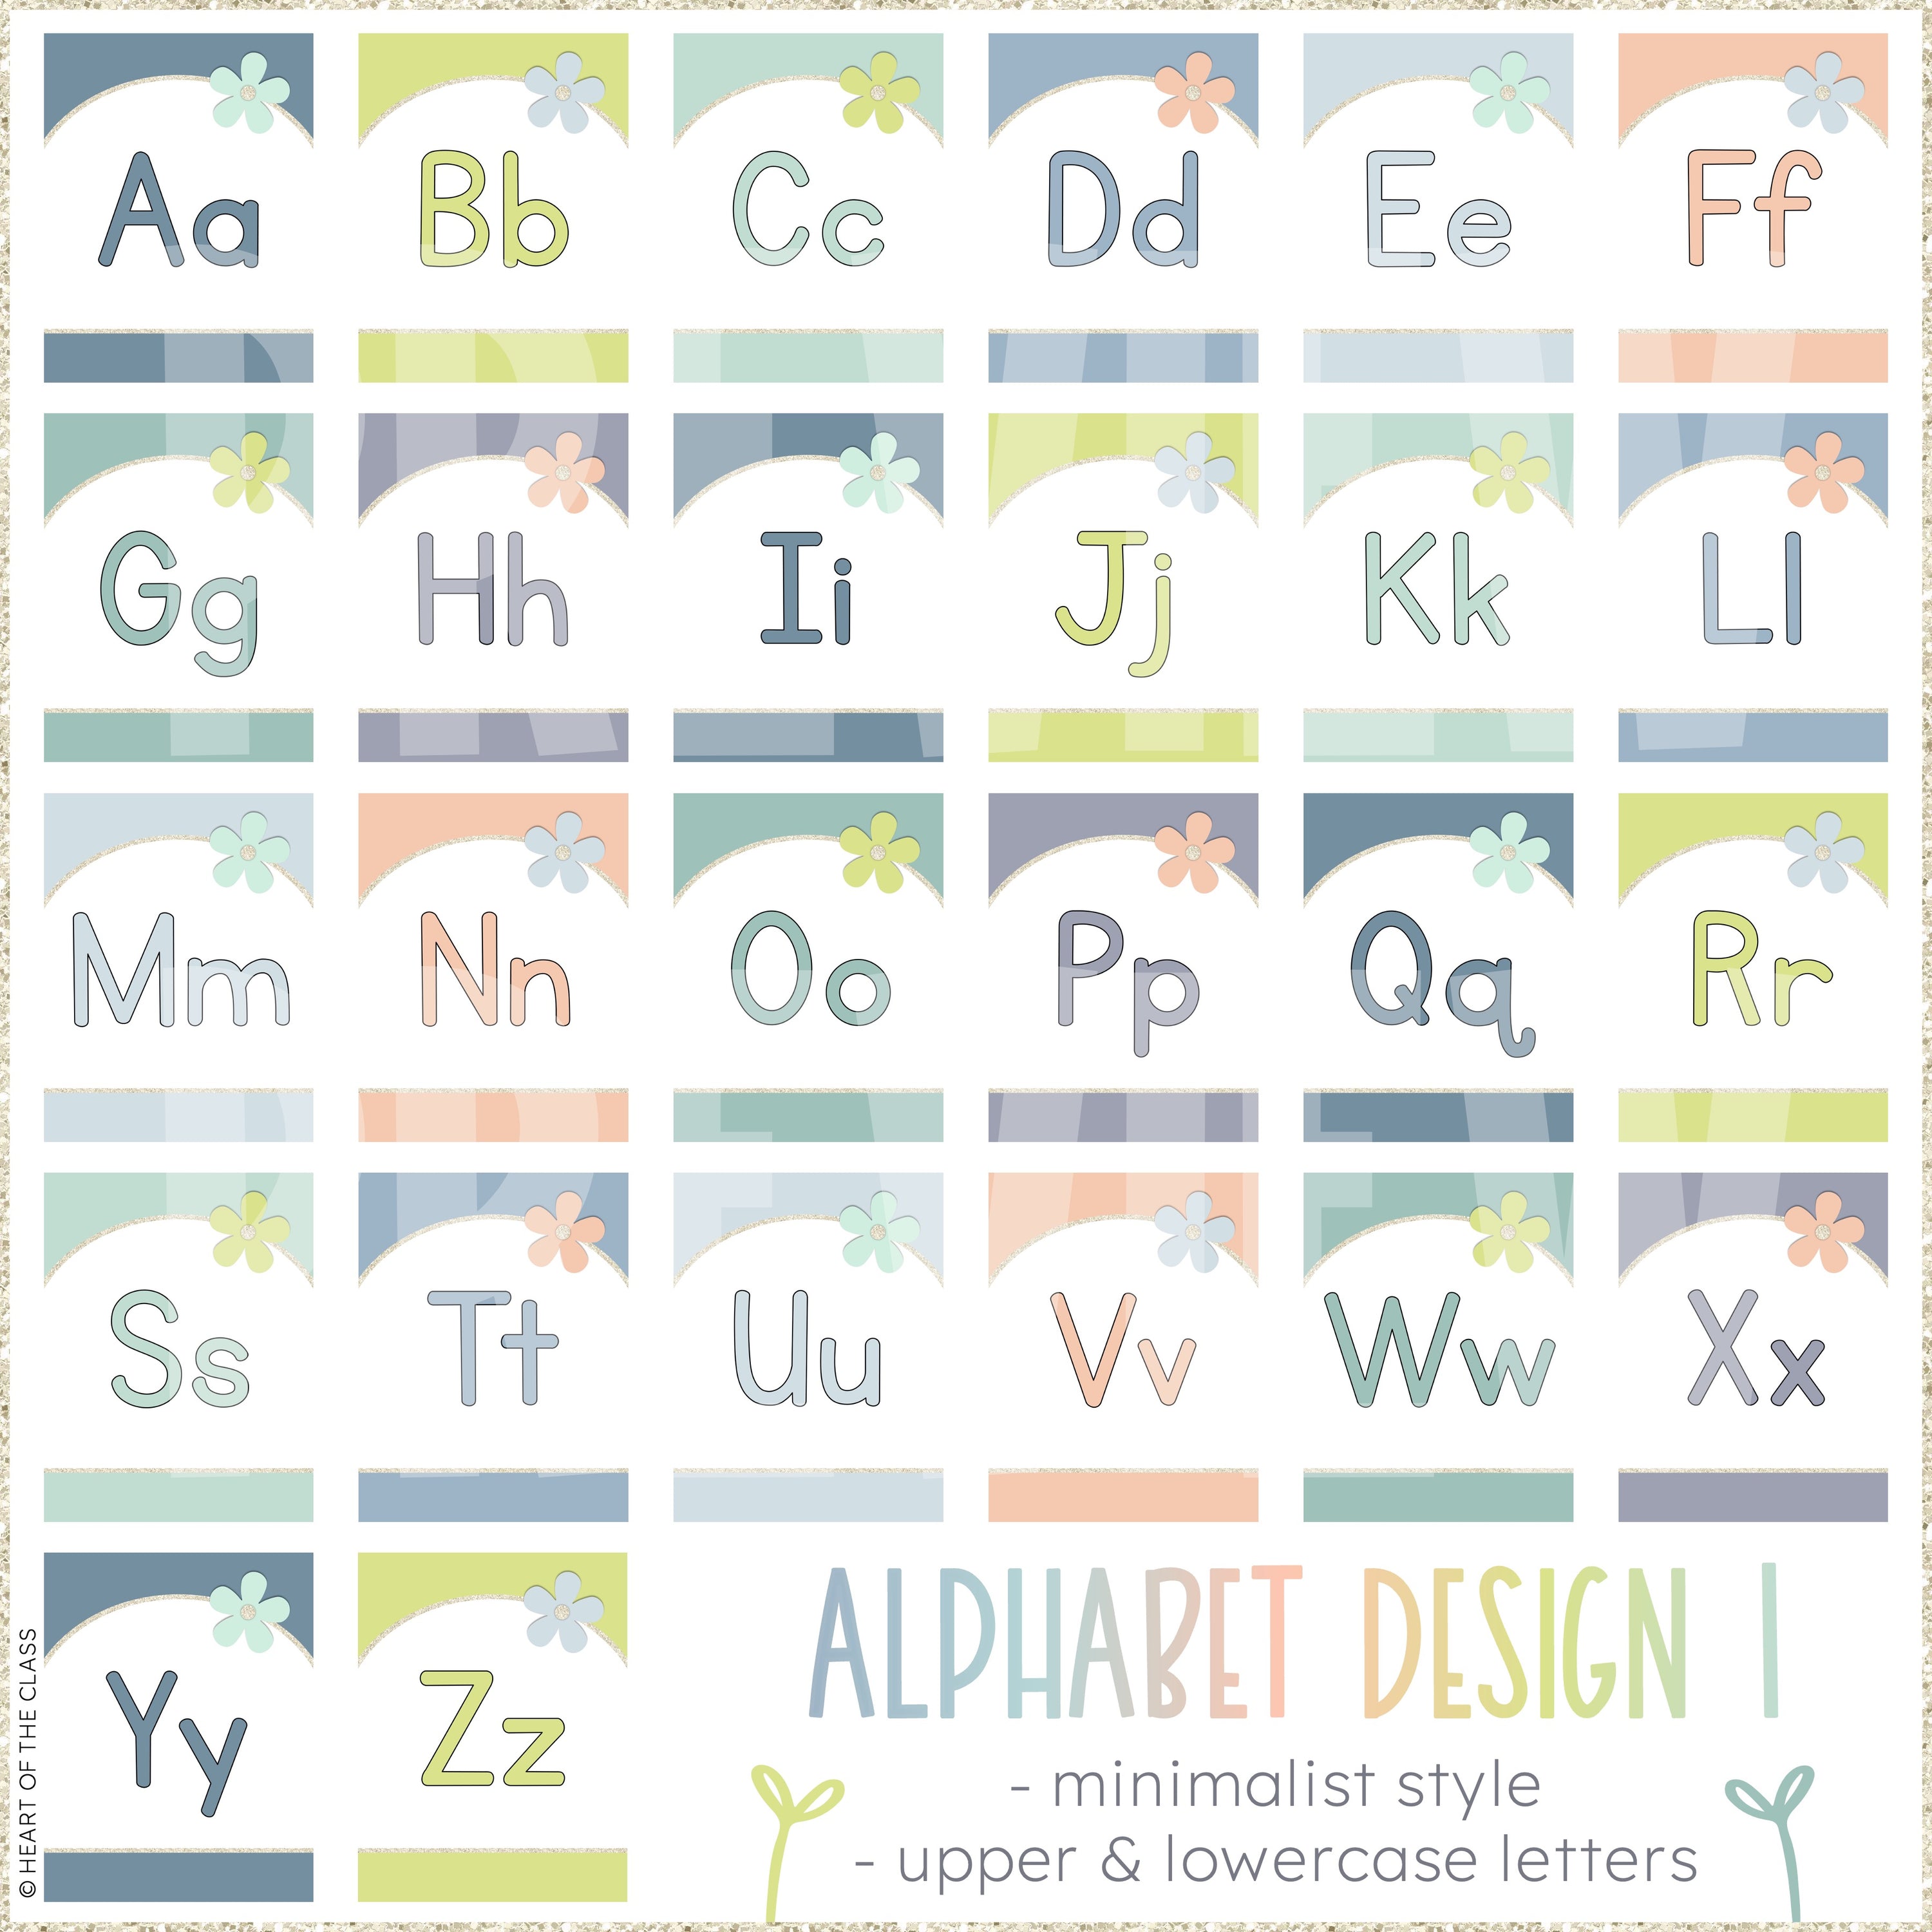 Hello Calm Alphabet Posters